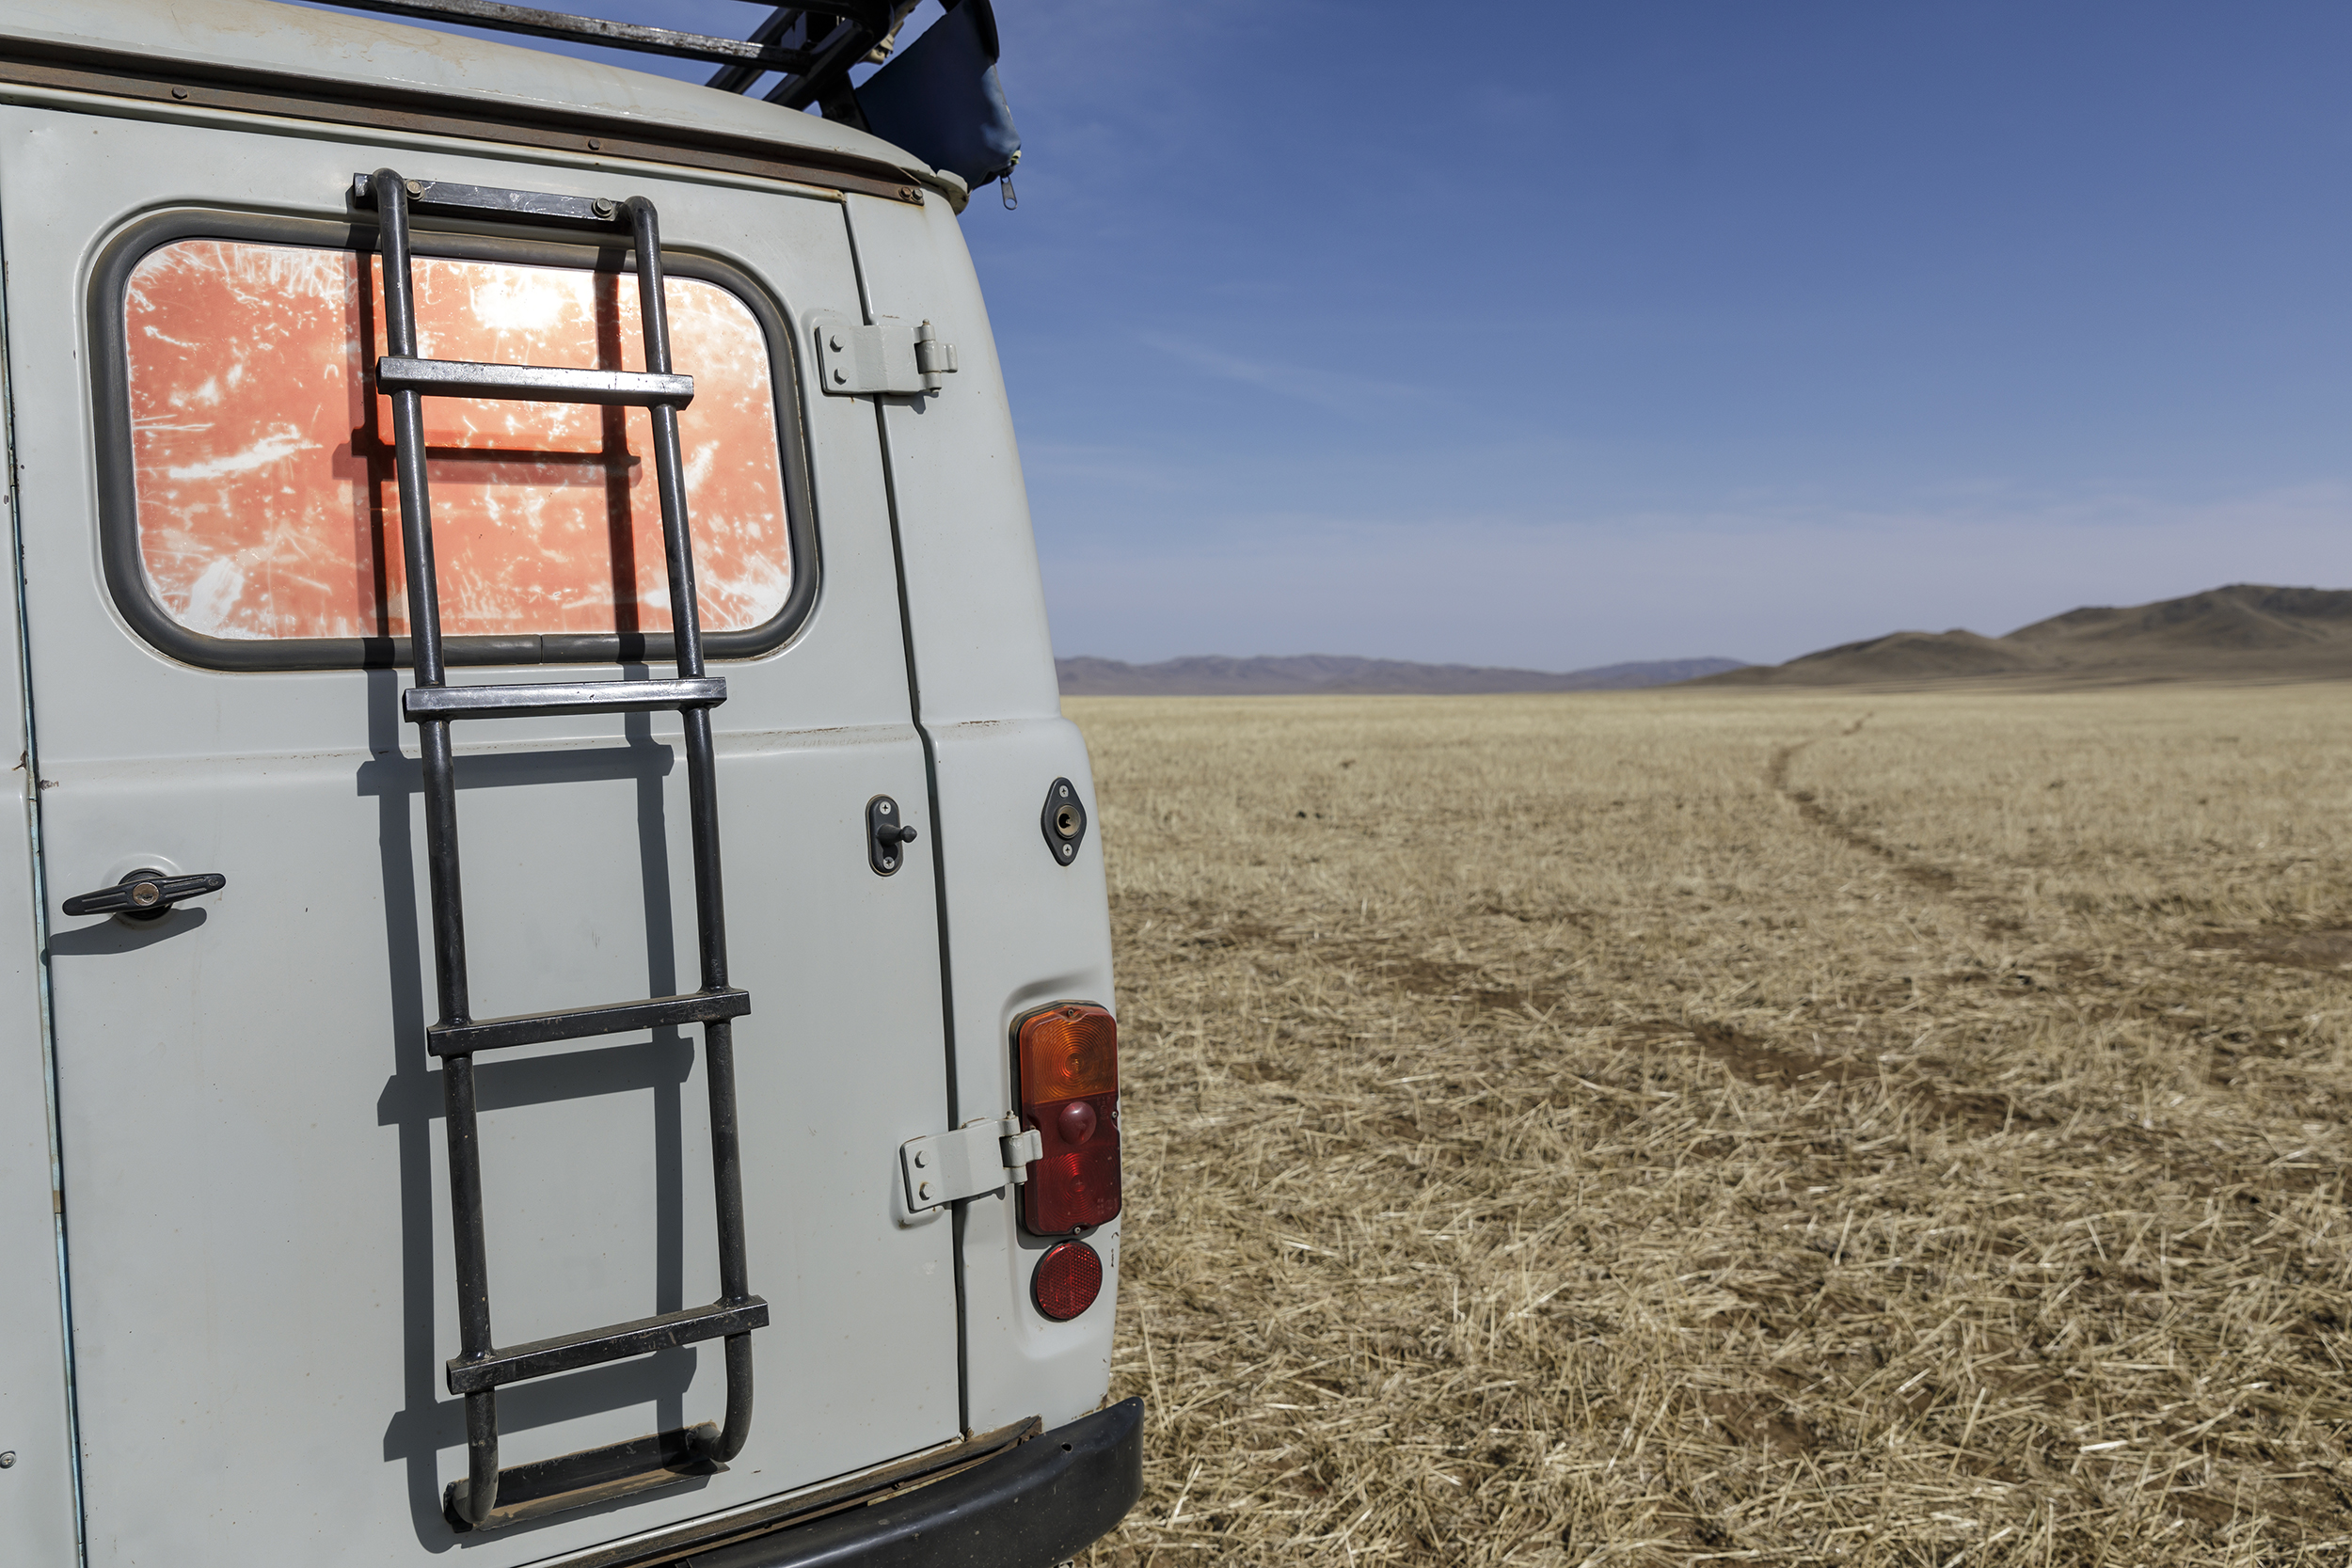 Russian Furgon van in the wilderness of Mongolia. Mongolia photography tour.